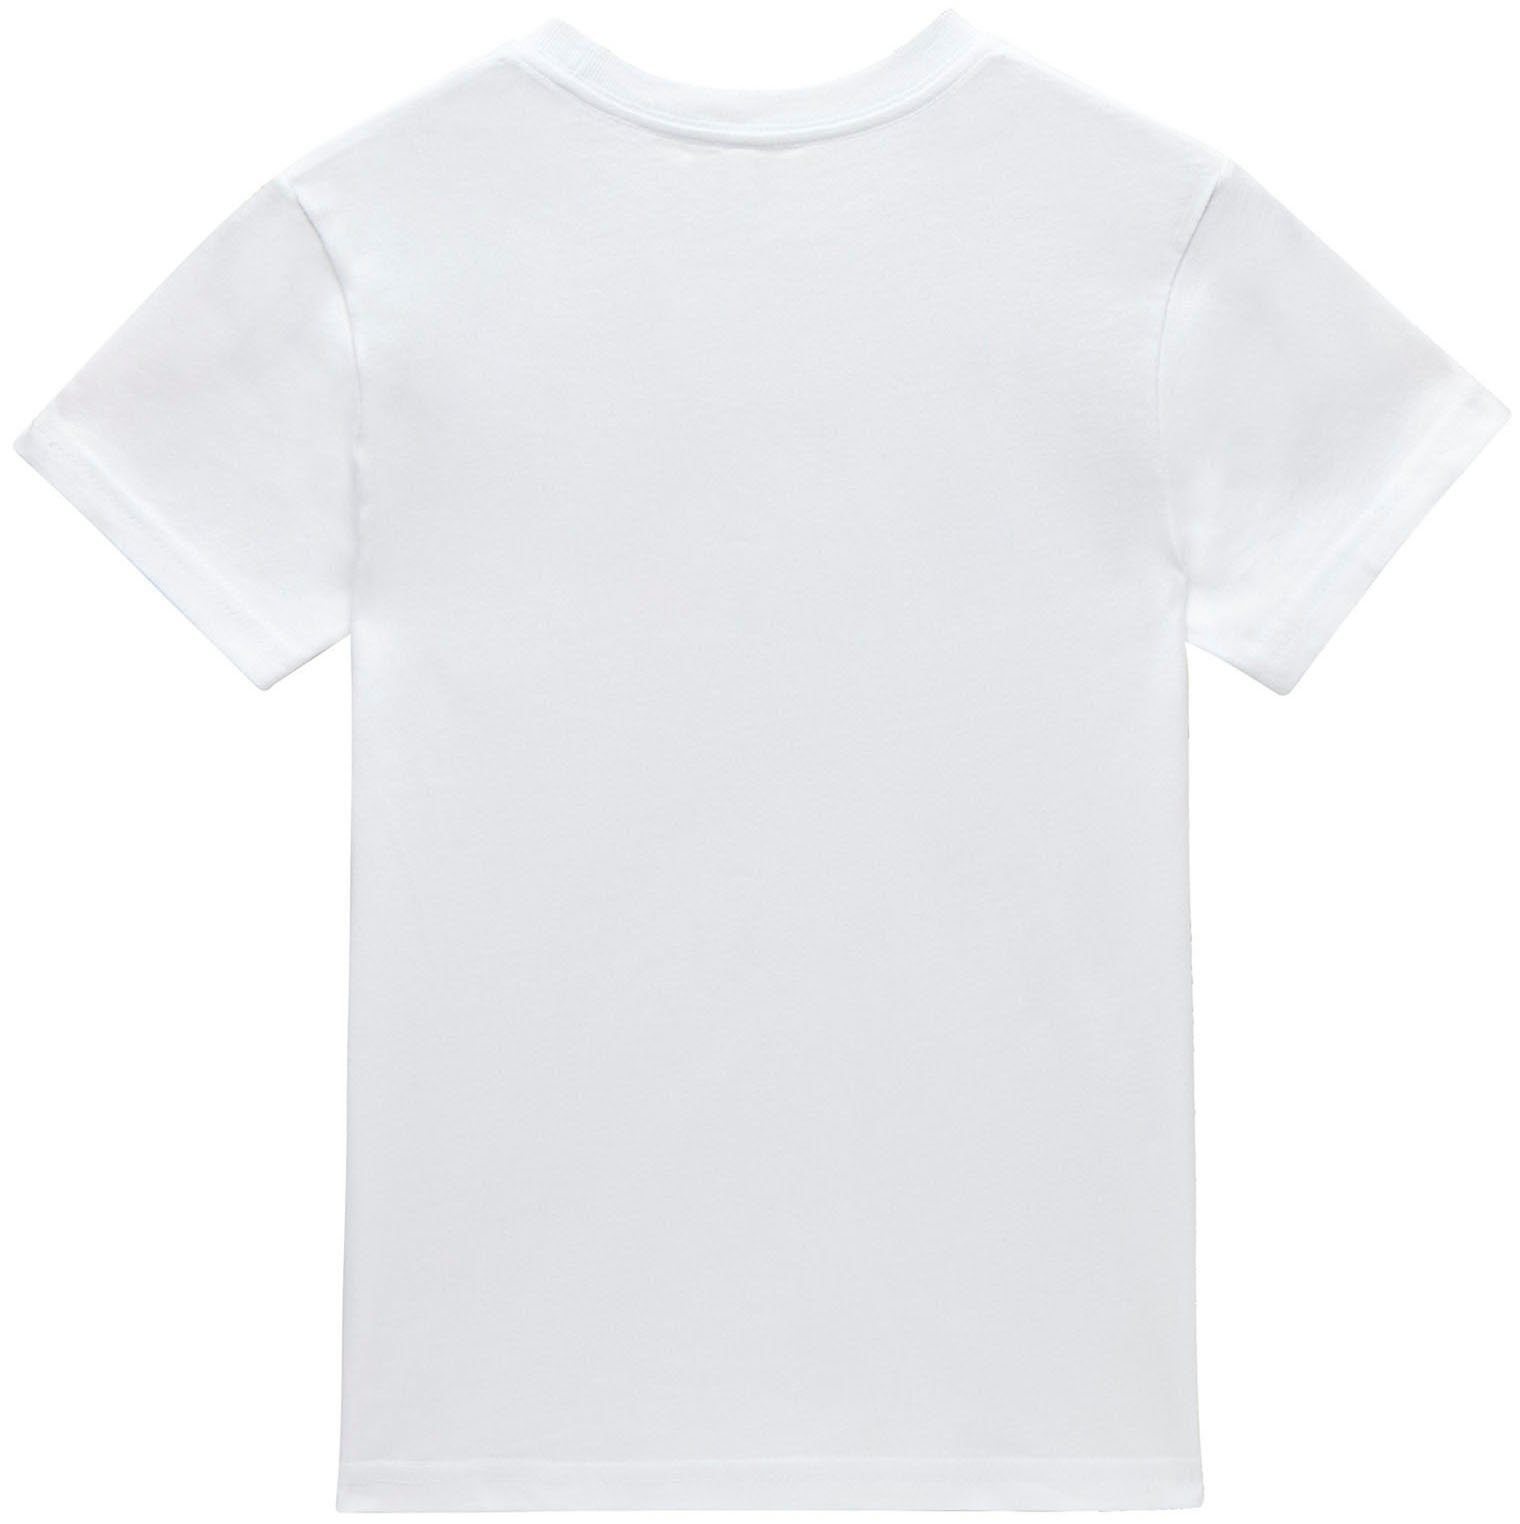 CLASSIC KIDS VANS Vans weiß T-Shirt